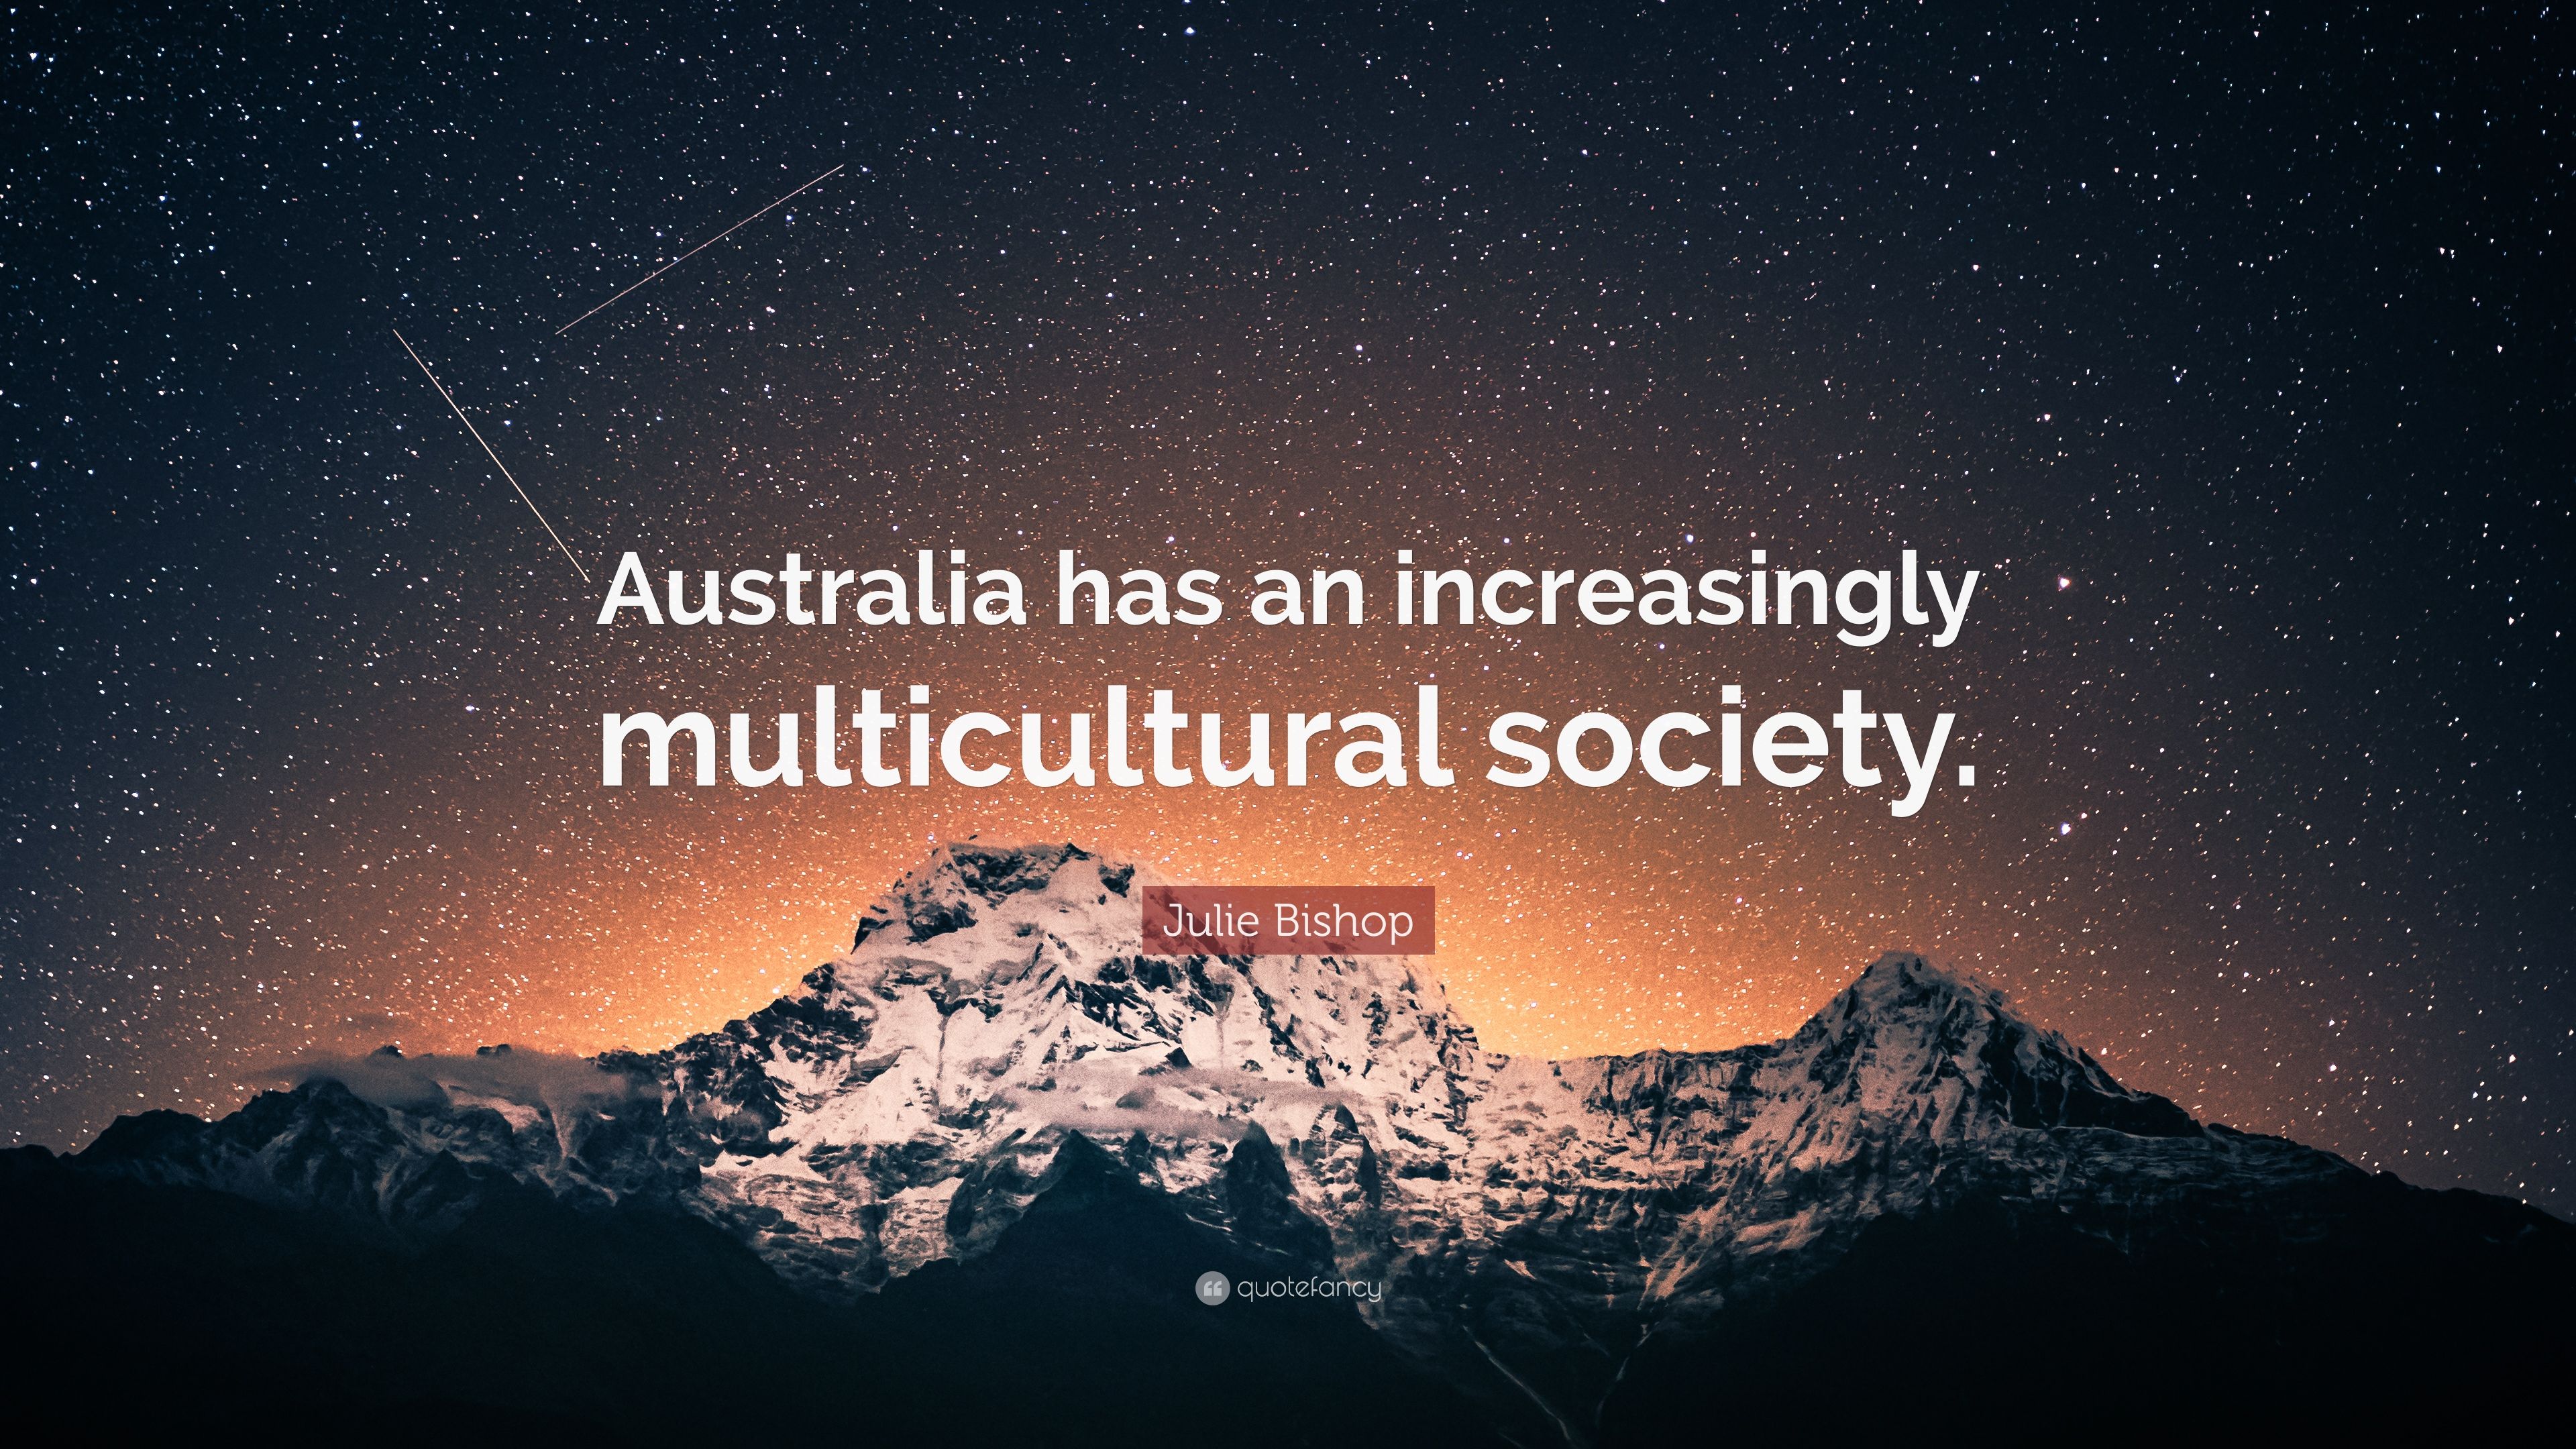 Julie Bishop Quote: “Australia has an increasingly